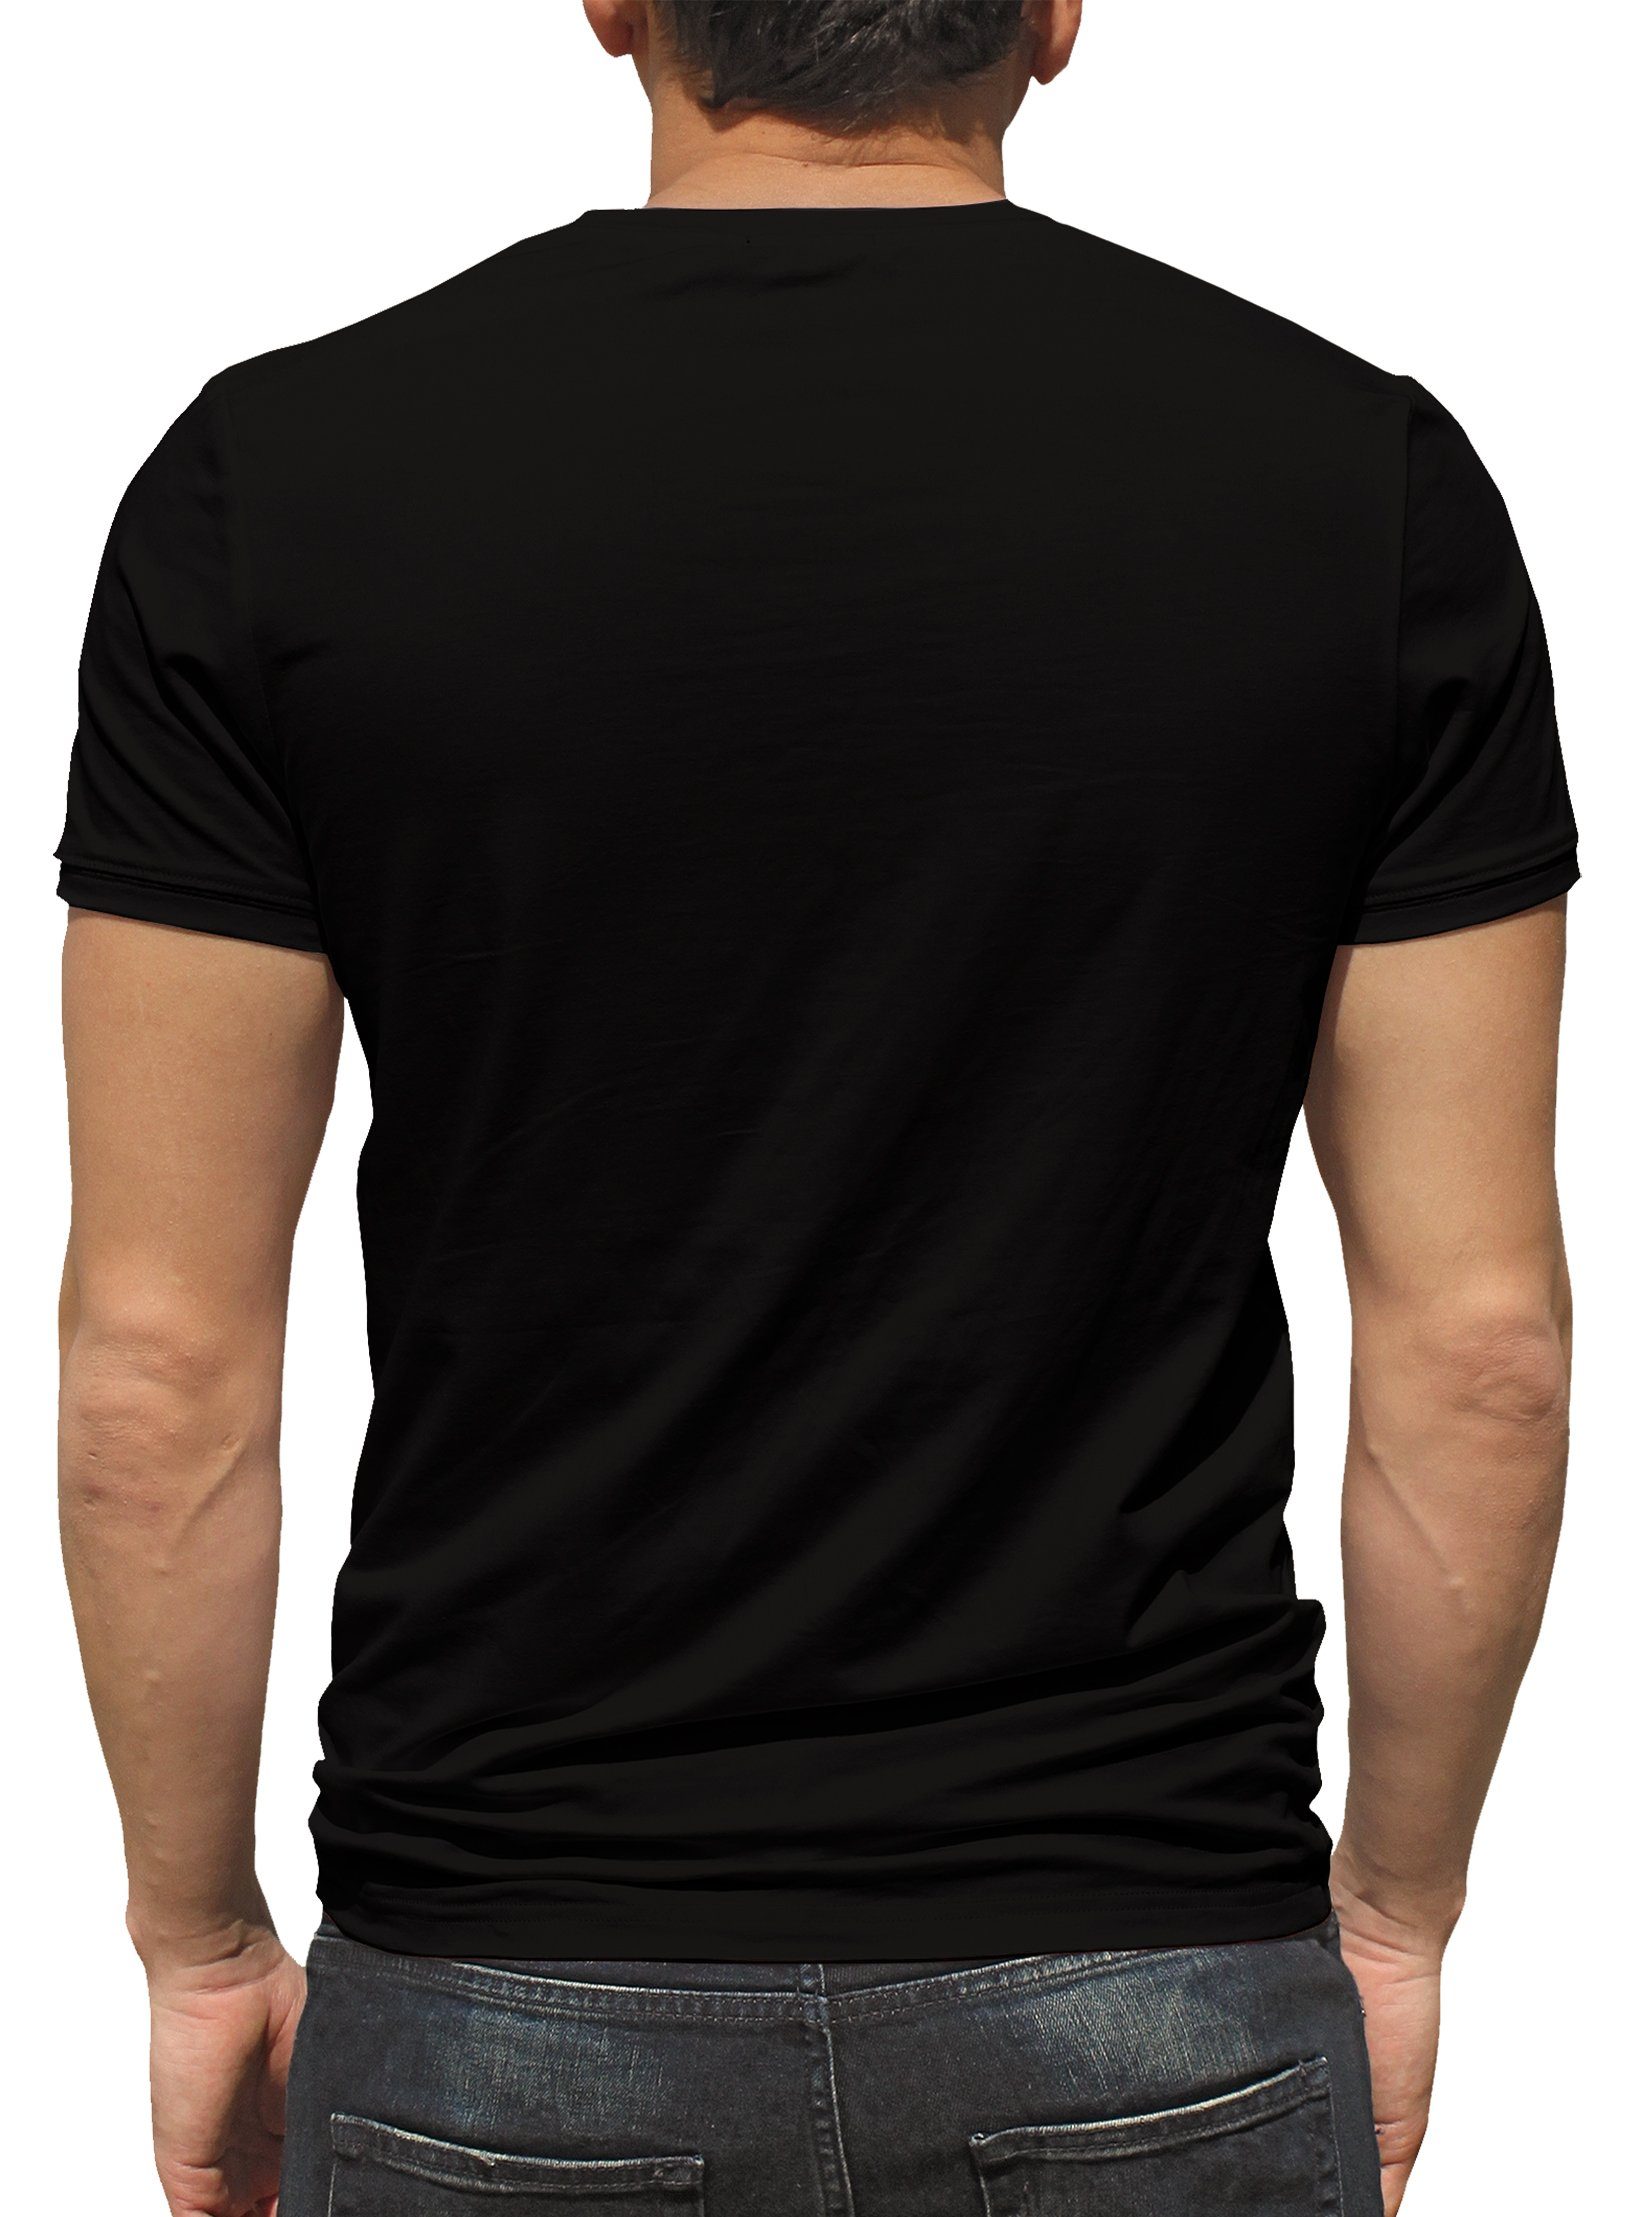 Grinch TShirt-People Print-Shirt Team Herren T-Shirt